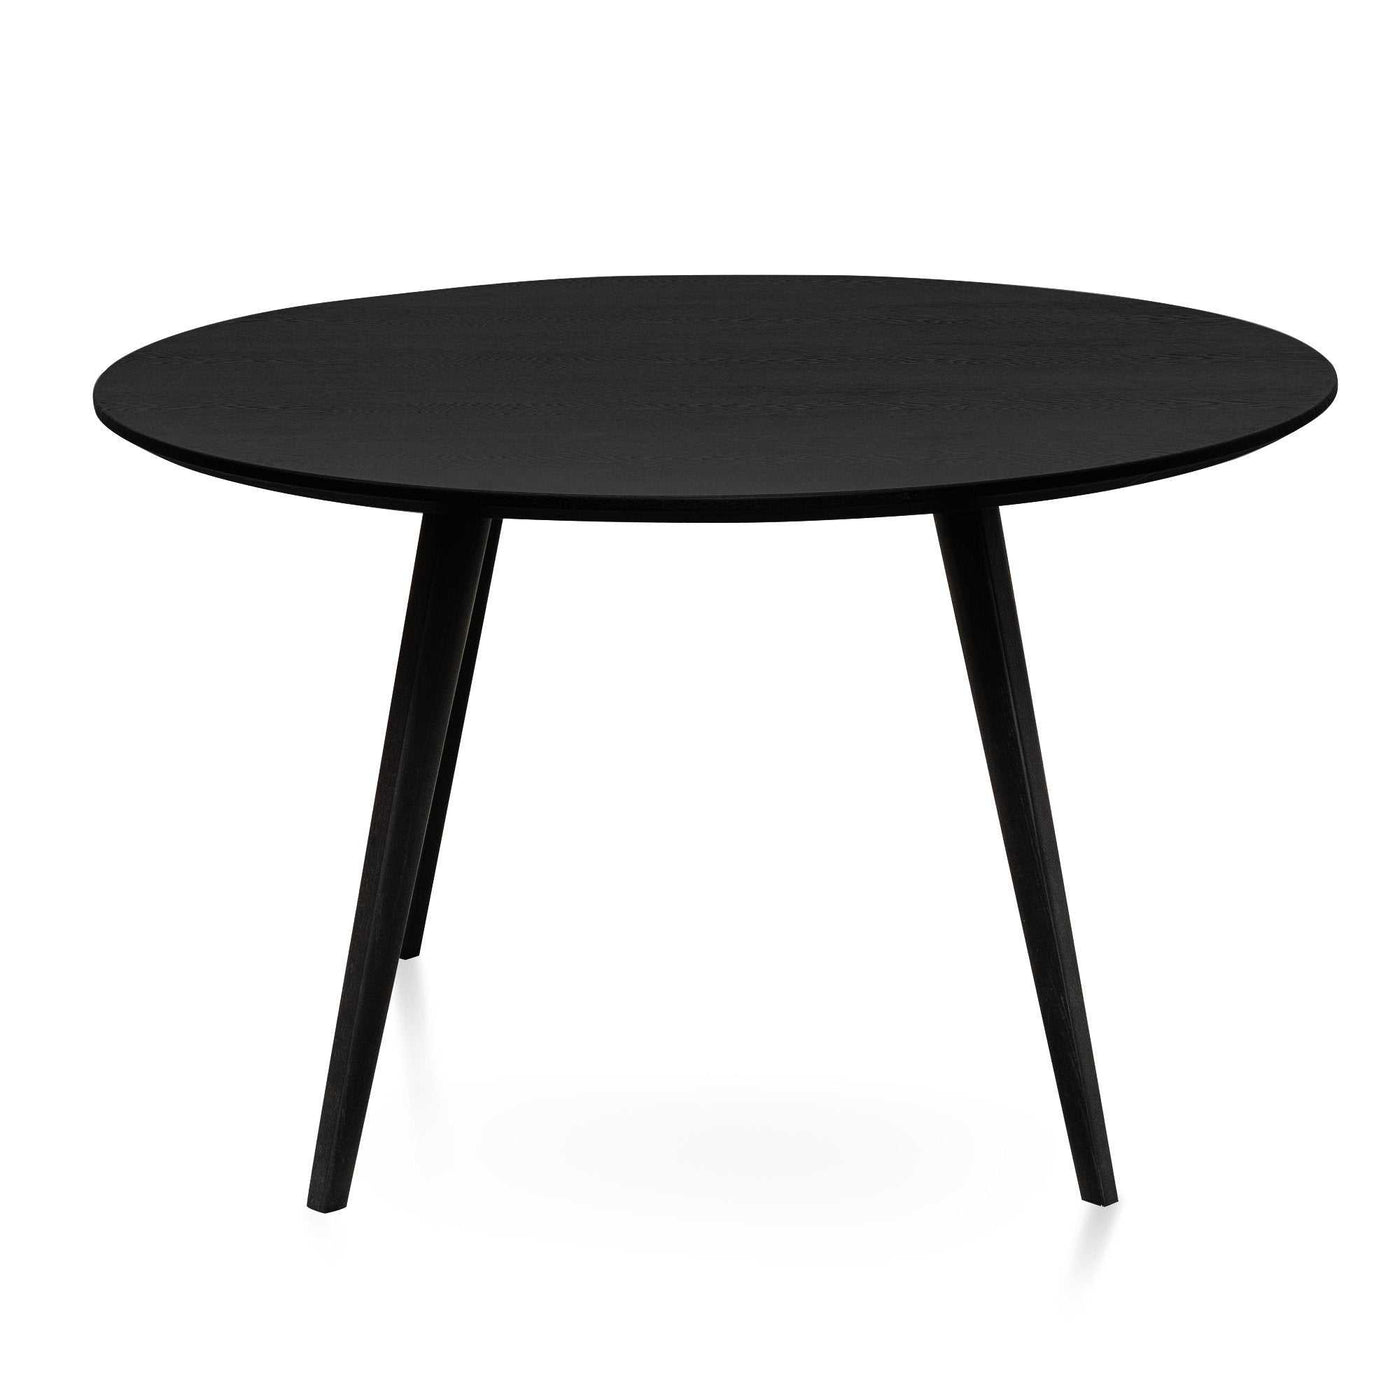 1.2m Veneer Wooden Dining Table - Full Black